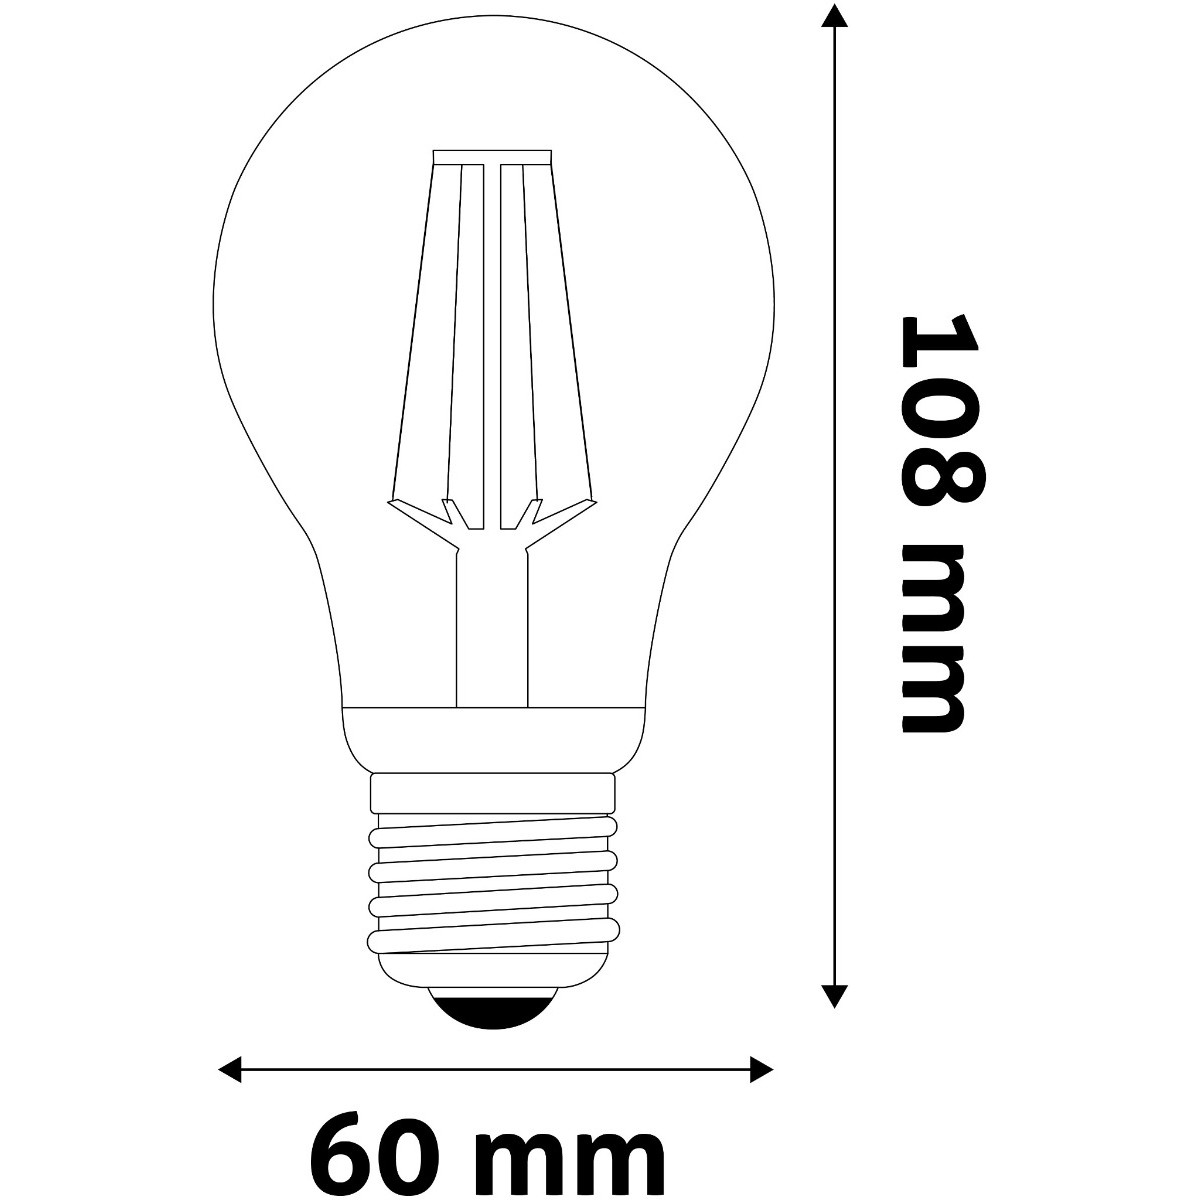 Avide LED White Filament Globe 10.5W E27 WW 2700K